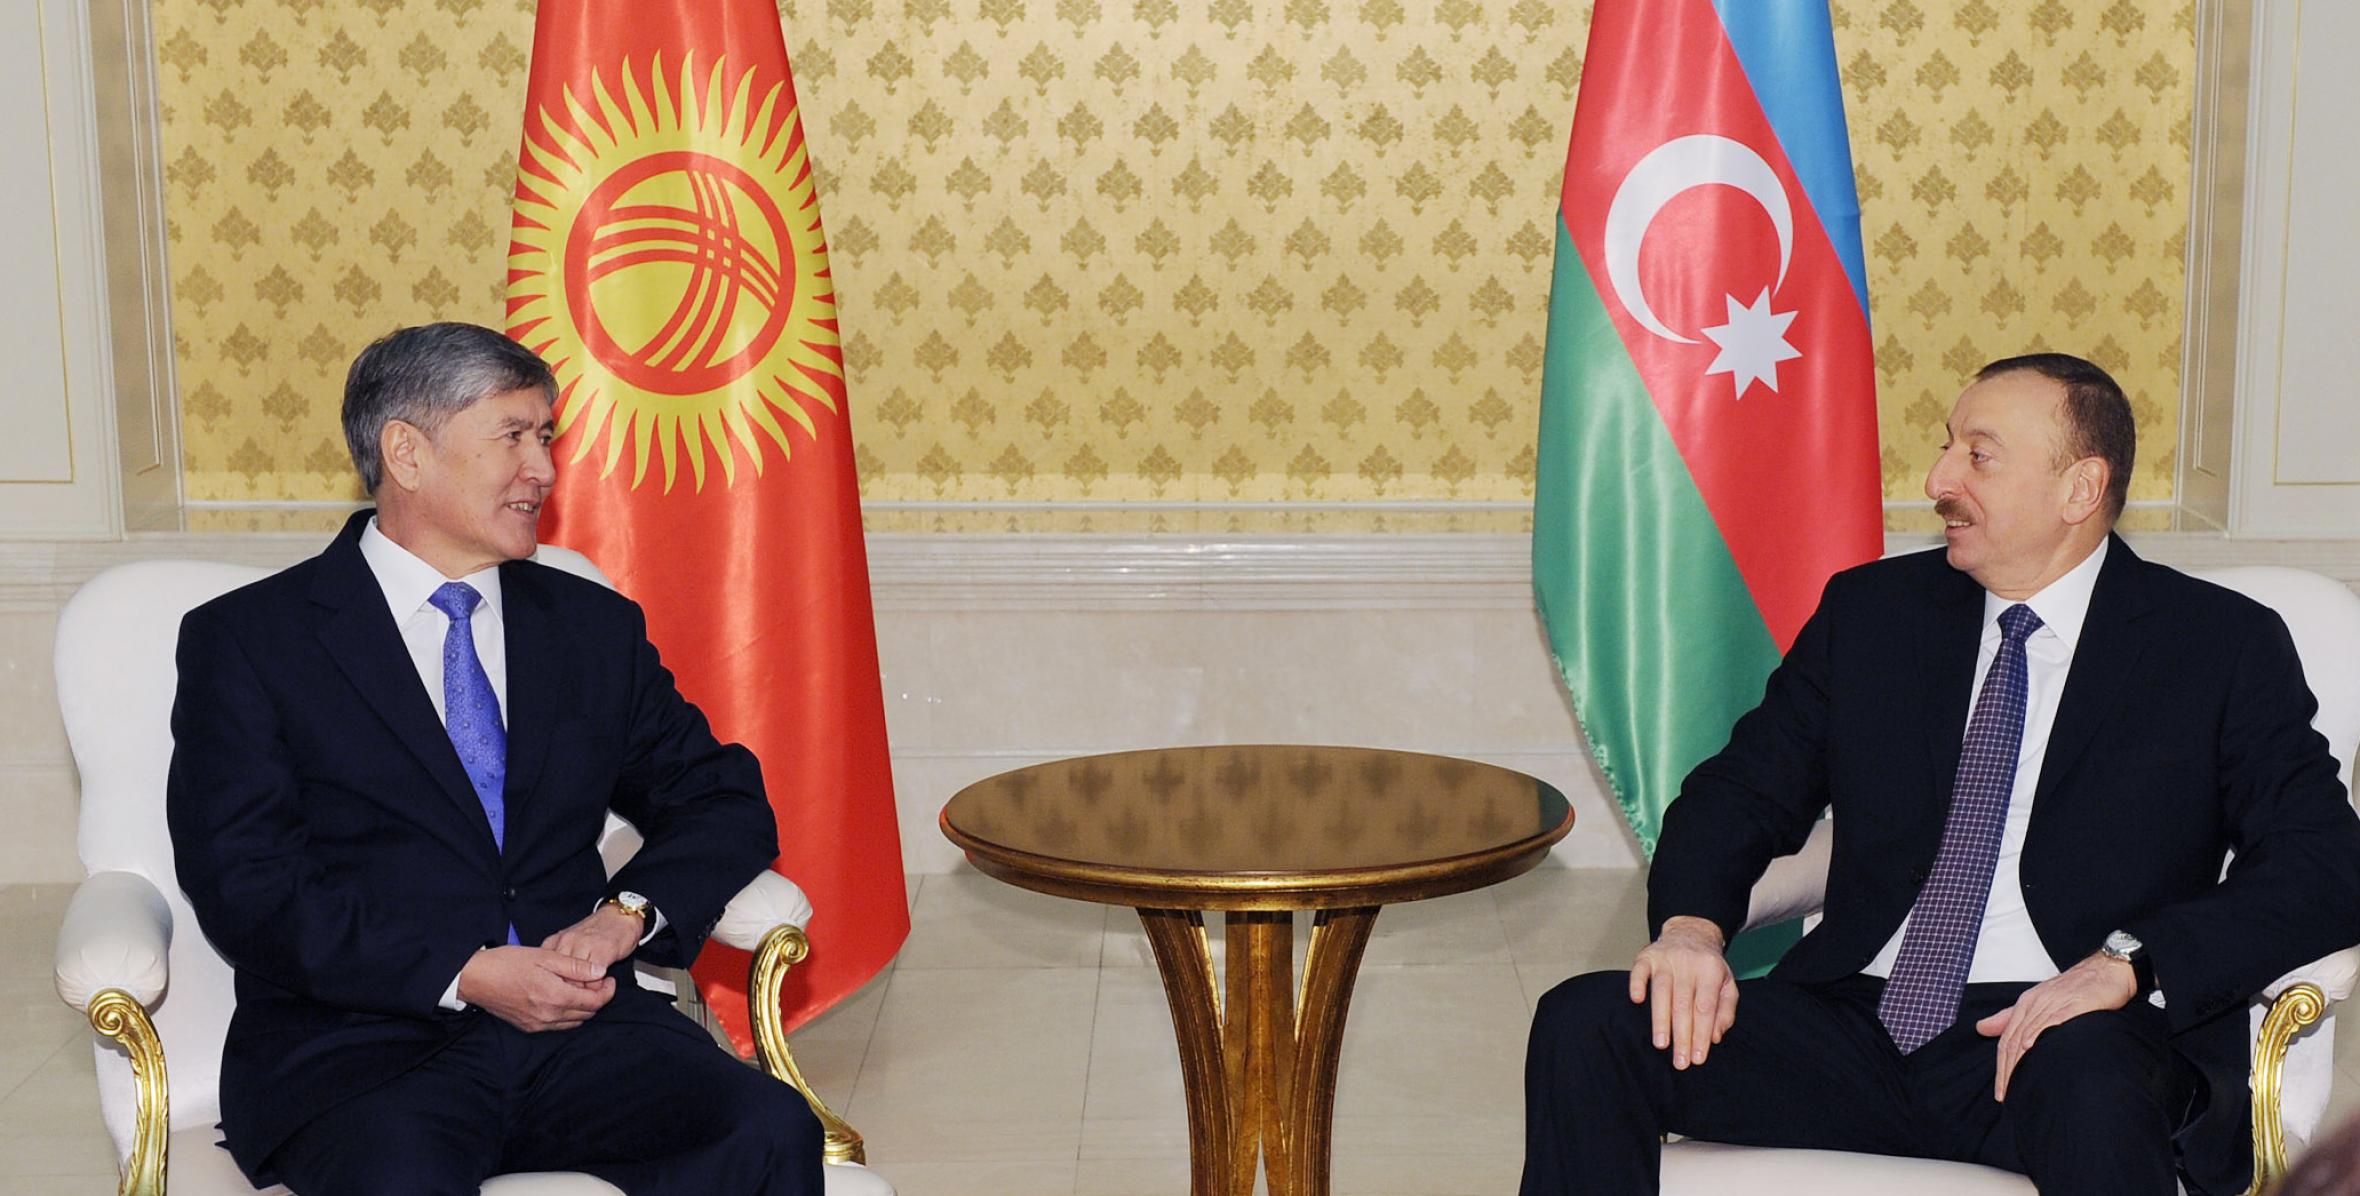 Ilham Aliyev and President of the Kyrgyz Republic Almazbek Atambayev had a face-to-face meeting